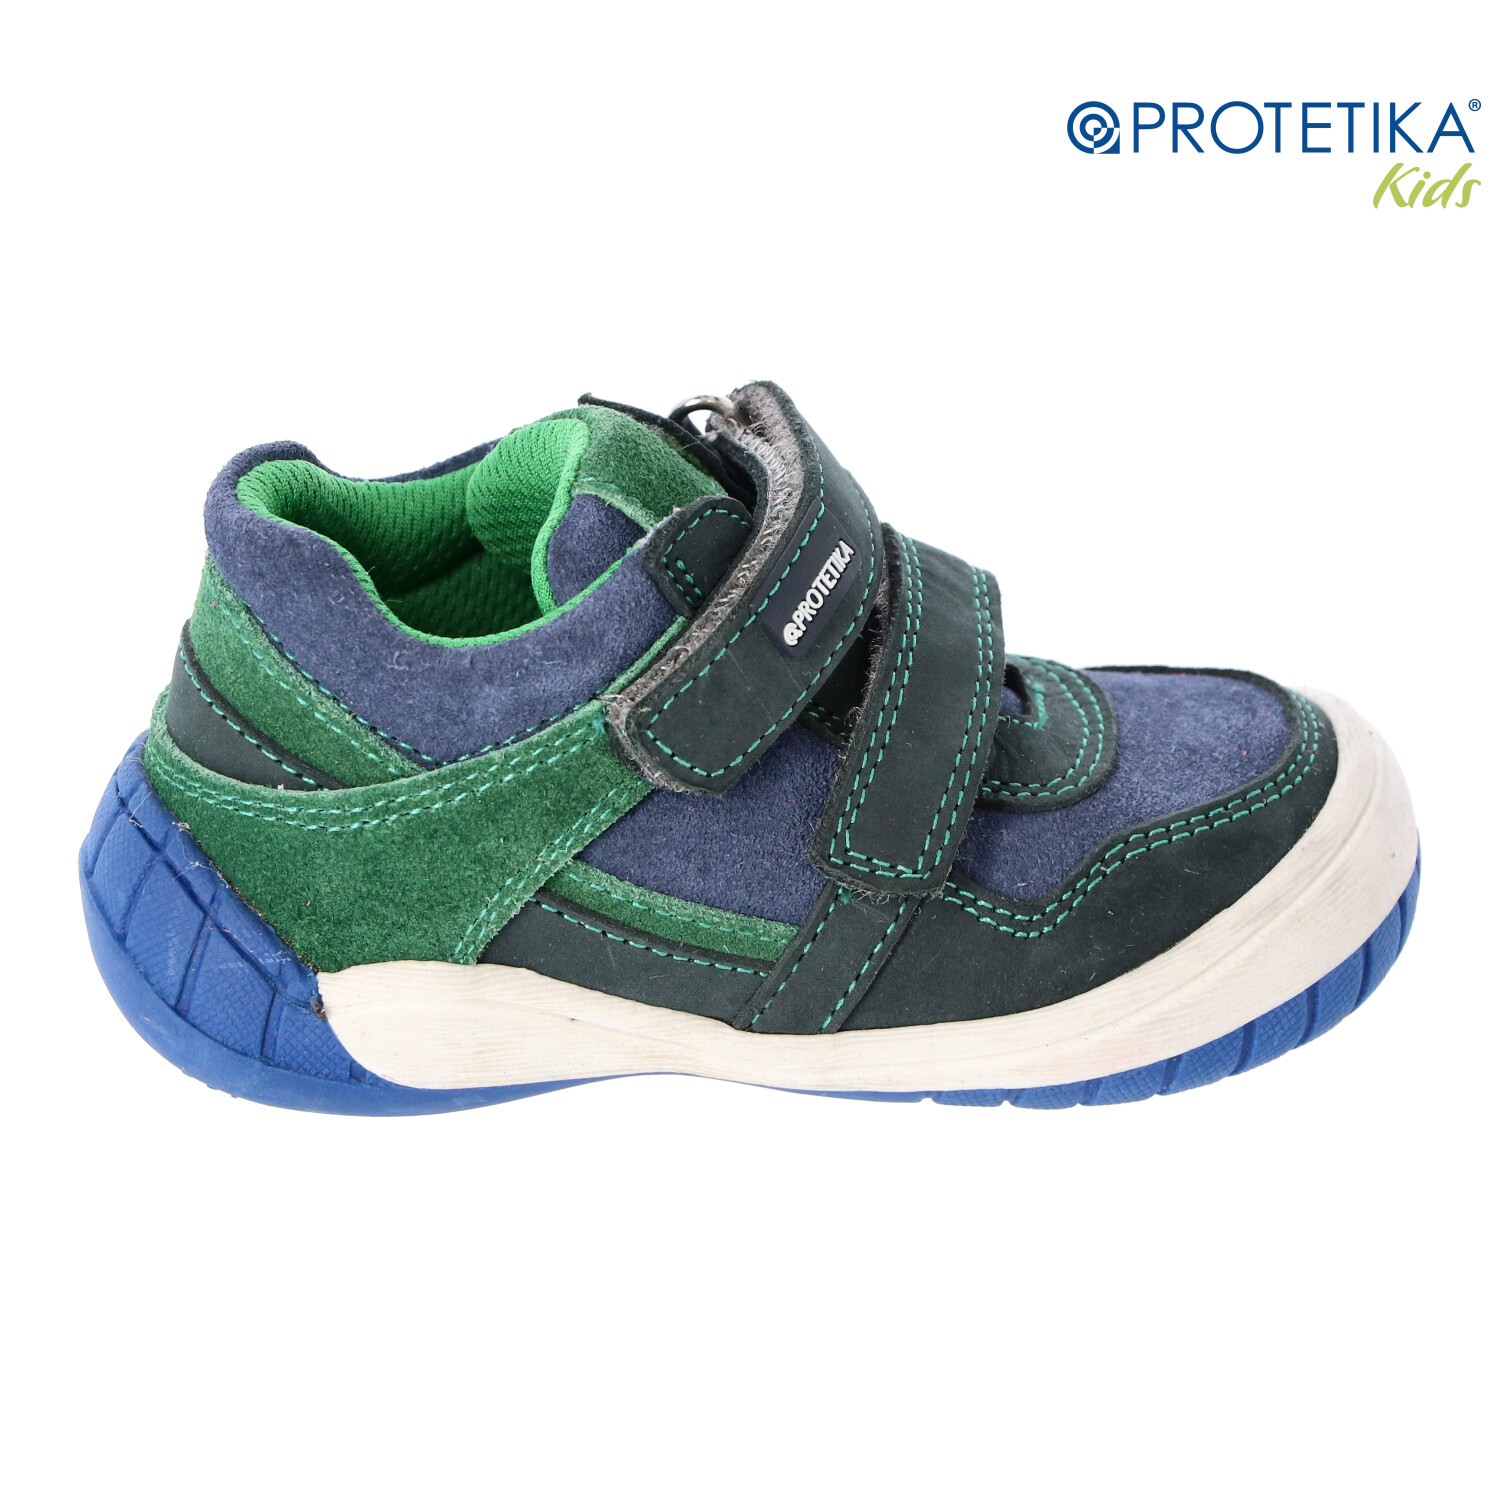 Protetika - topánky DAREL green